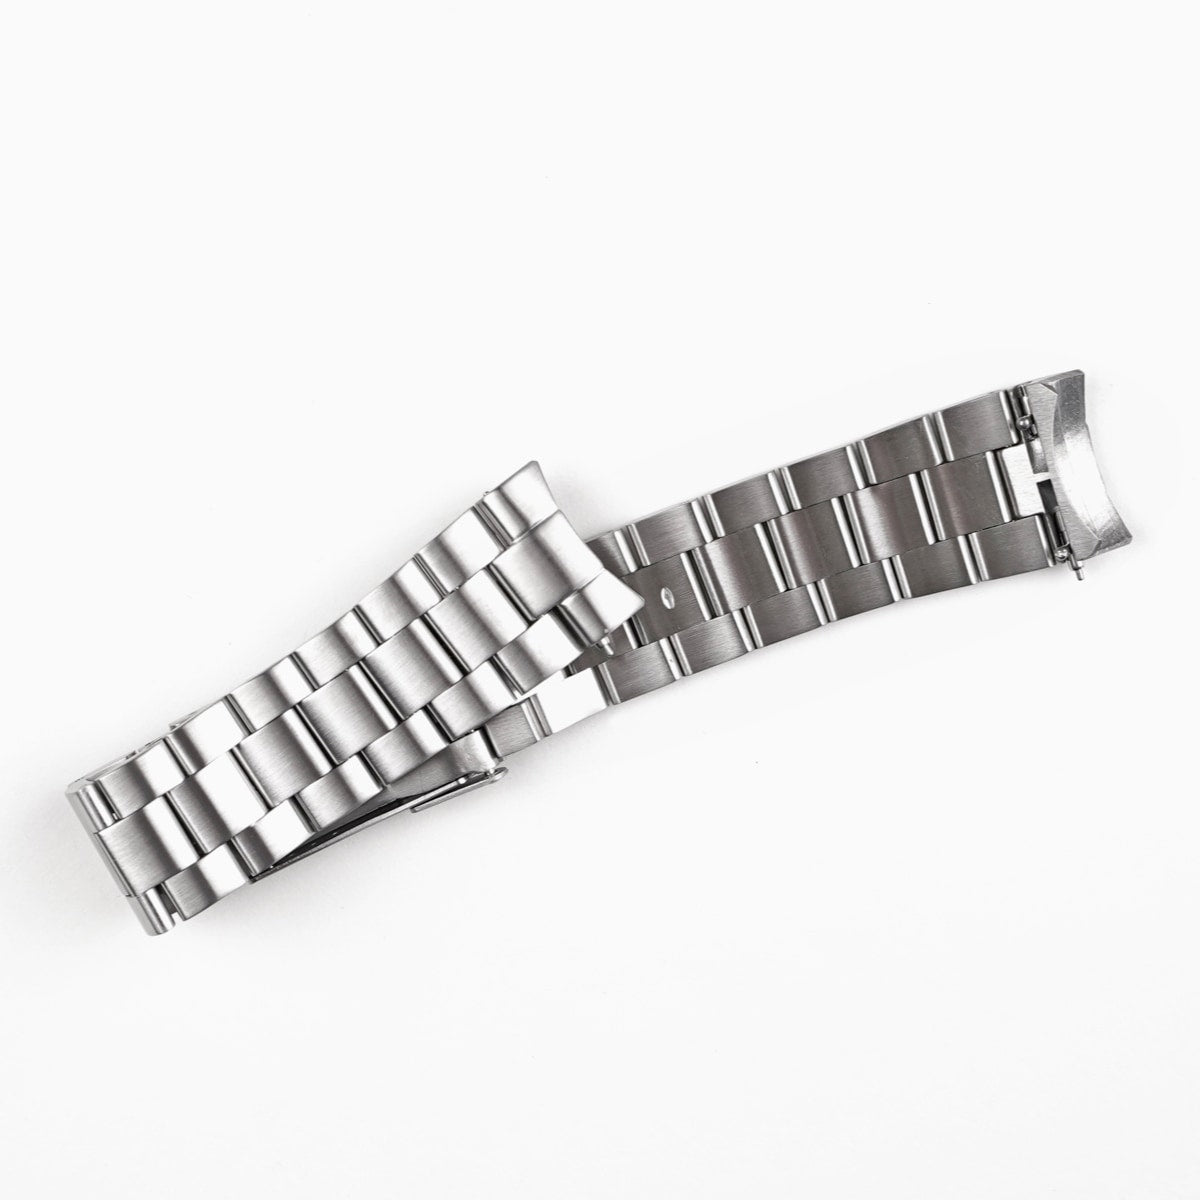 Standard Quick Release Bracelet